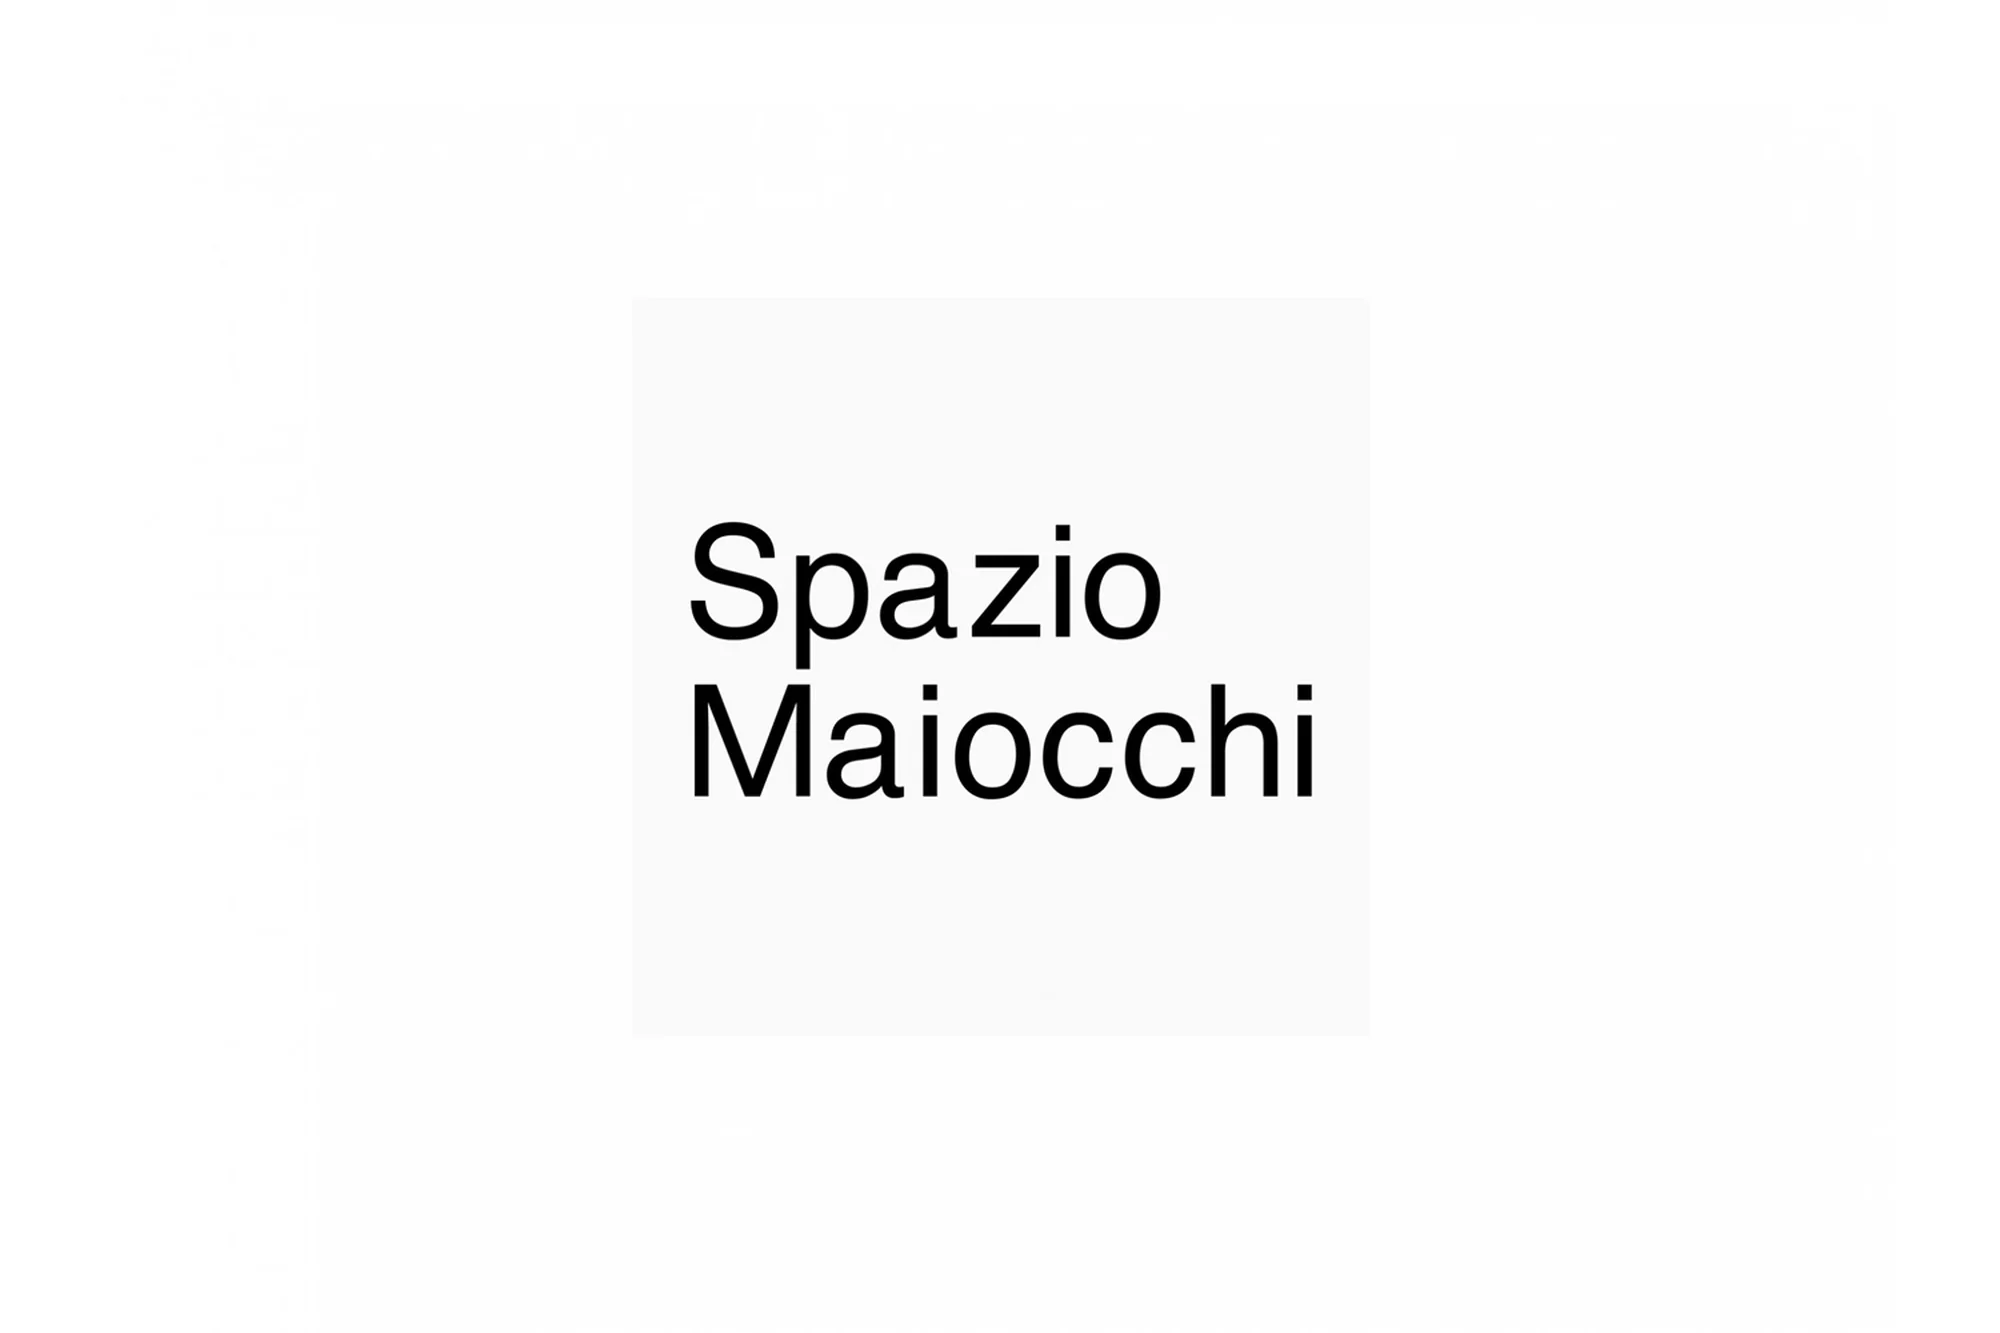 Spazio Maiocchi by Bureau Borsche